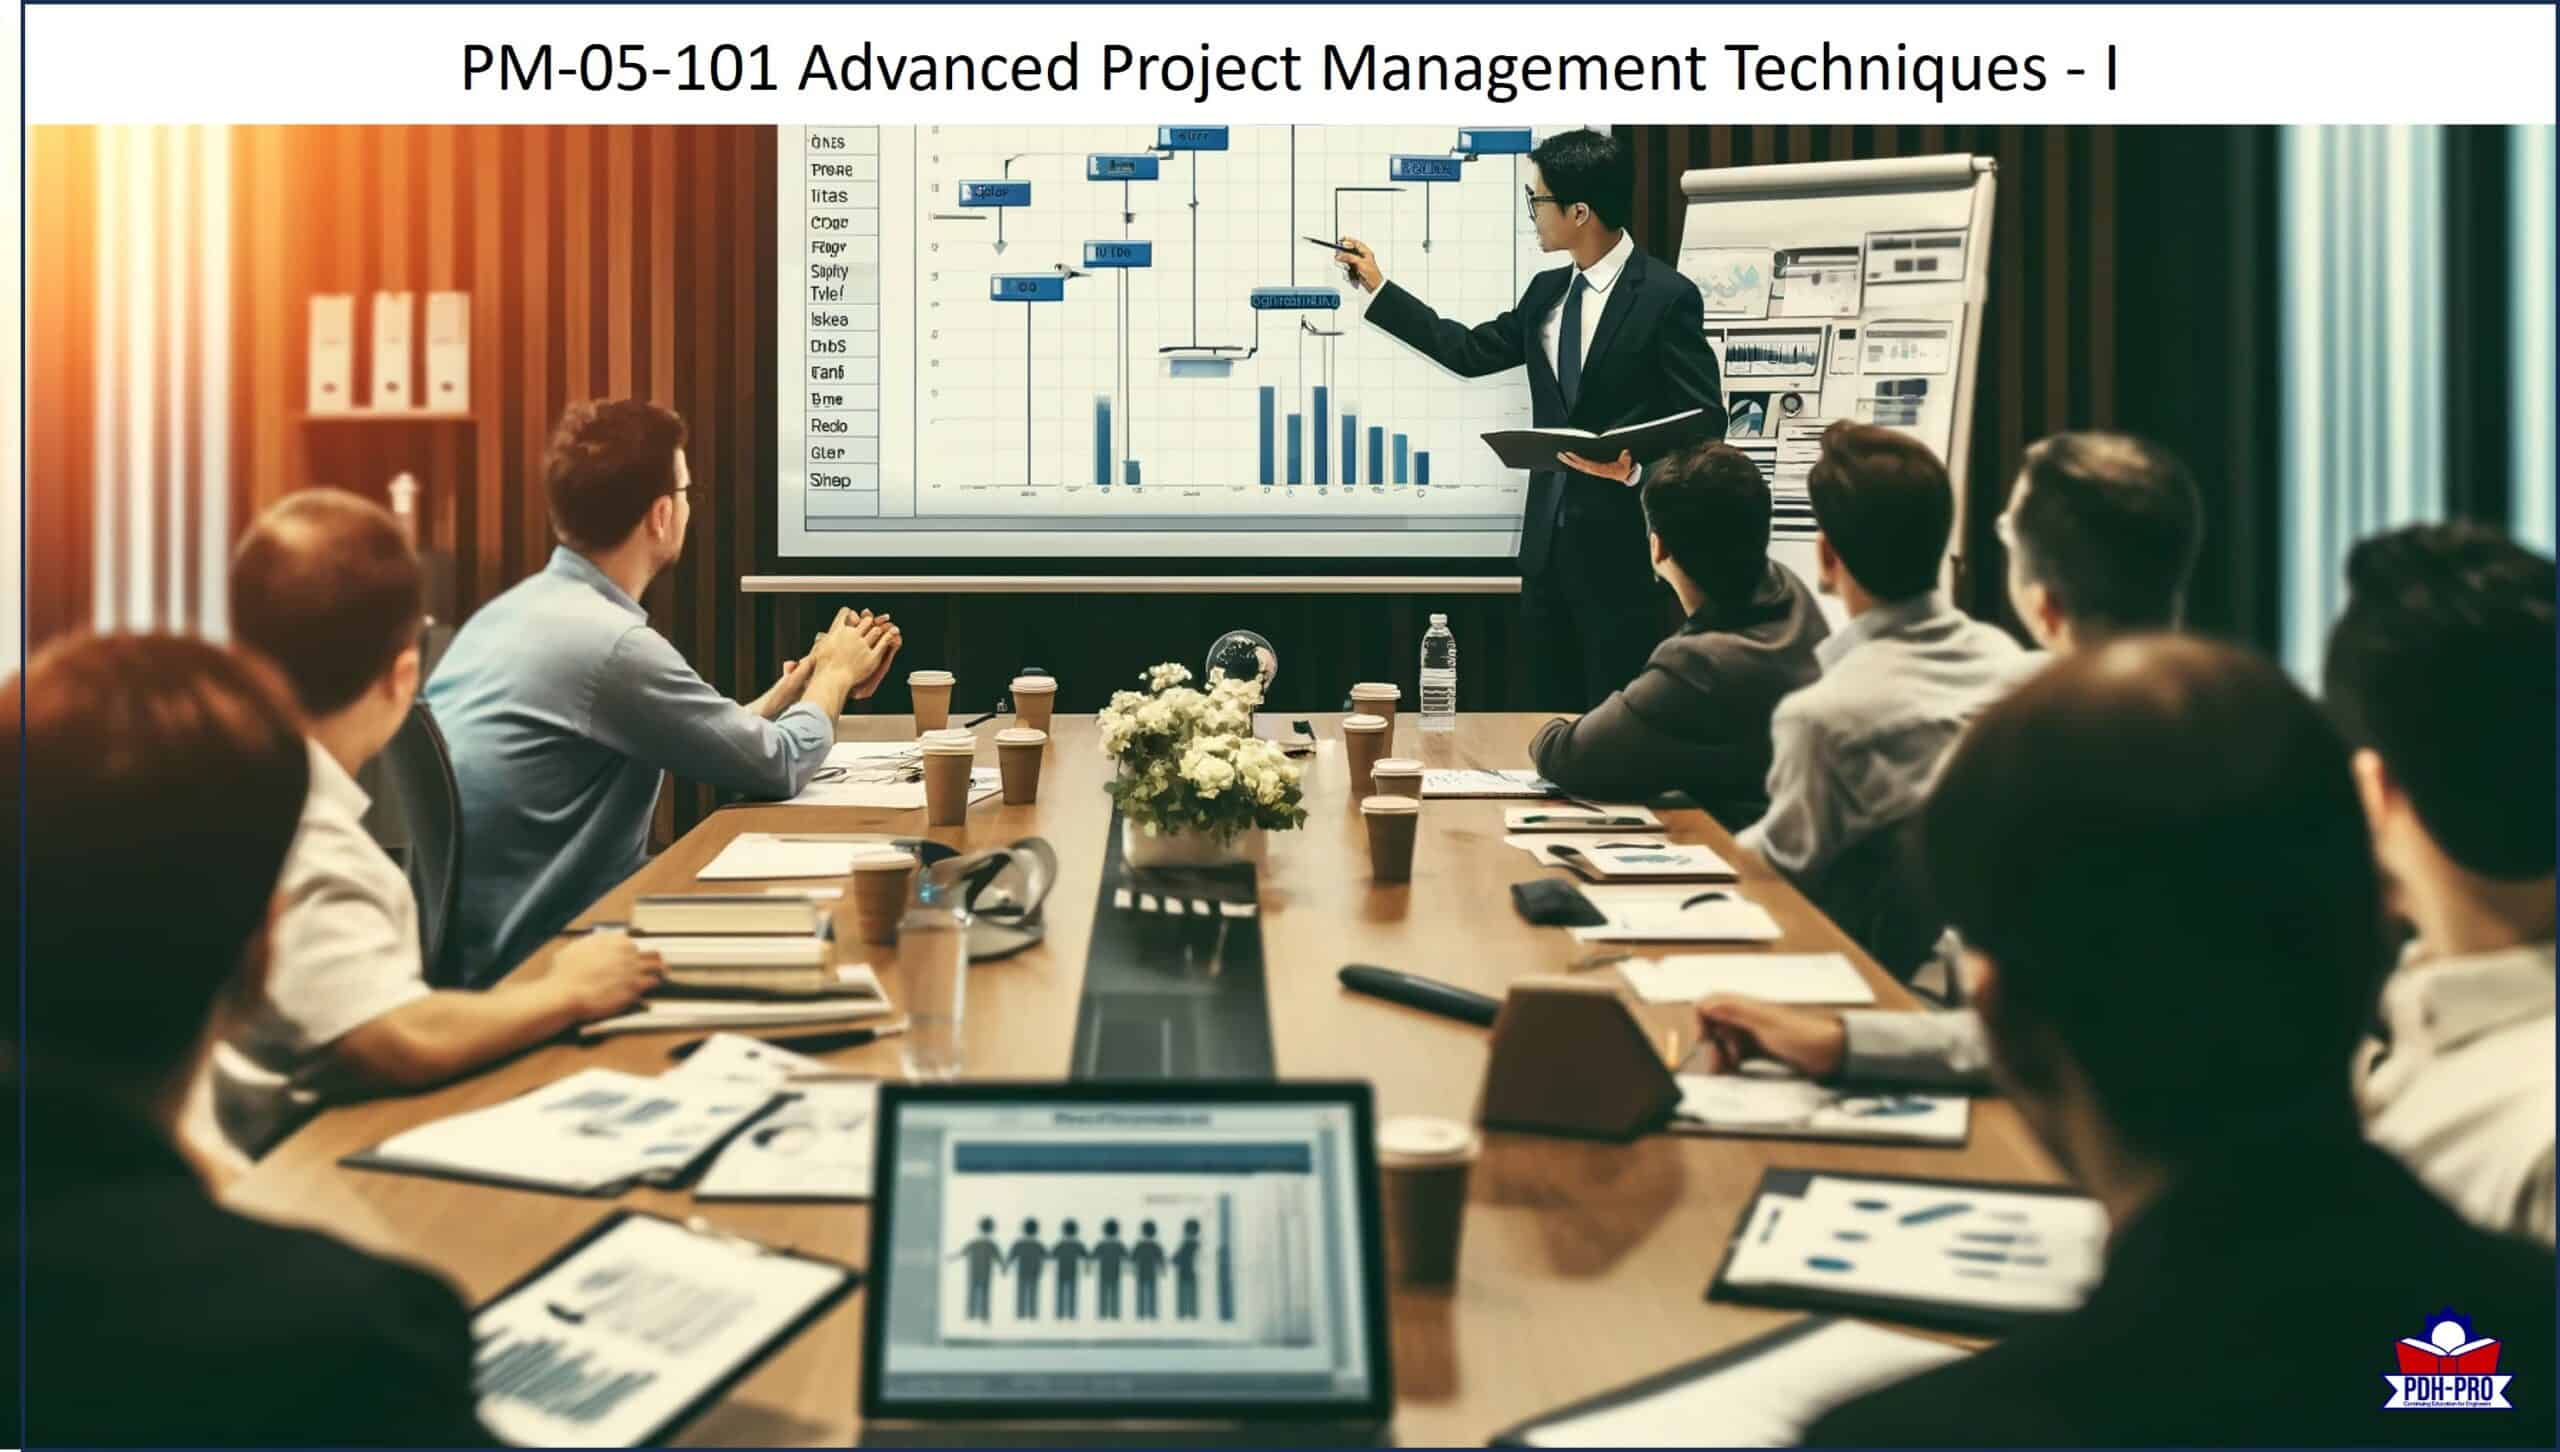 Advanced Project Management Techniques - I